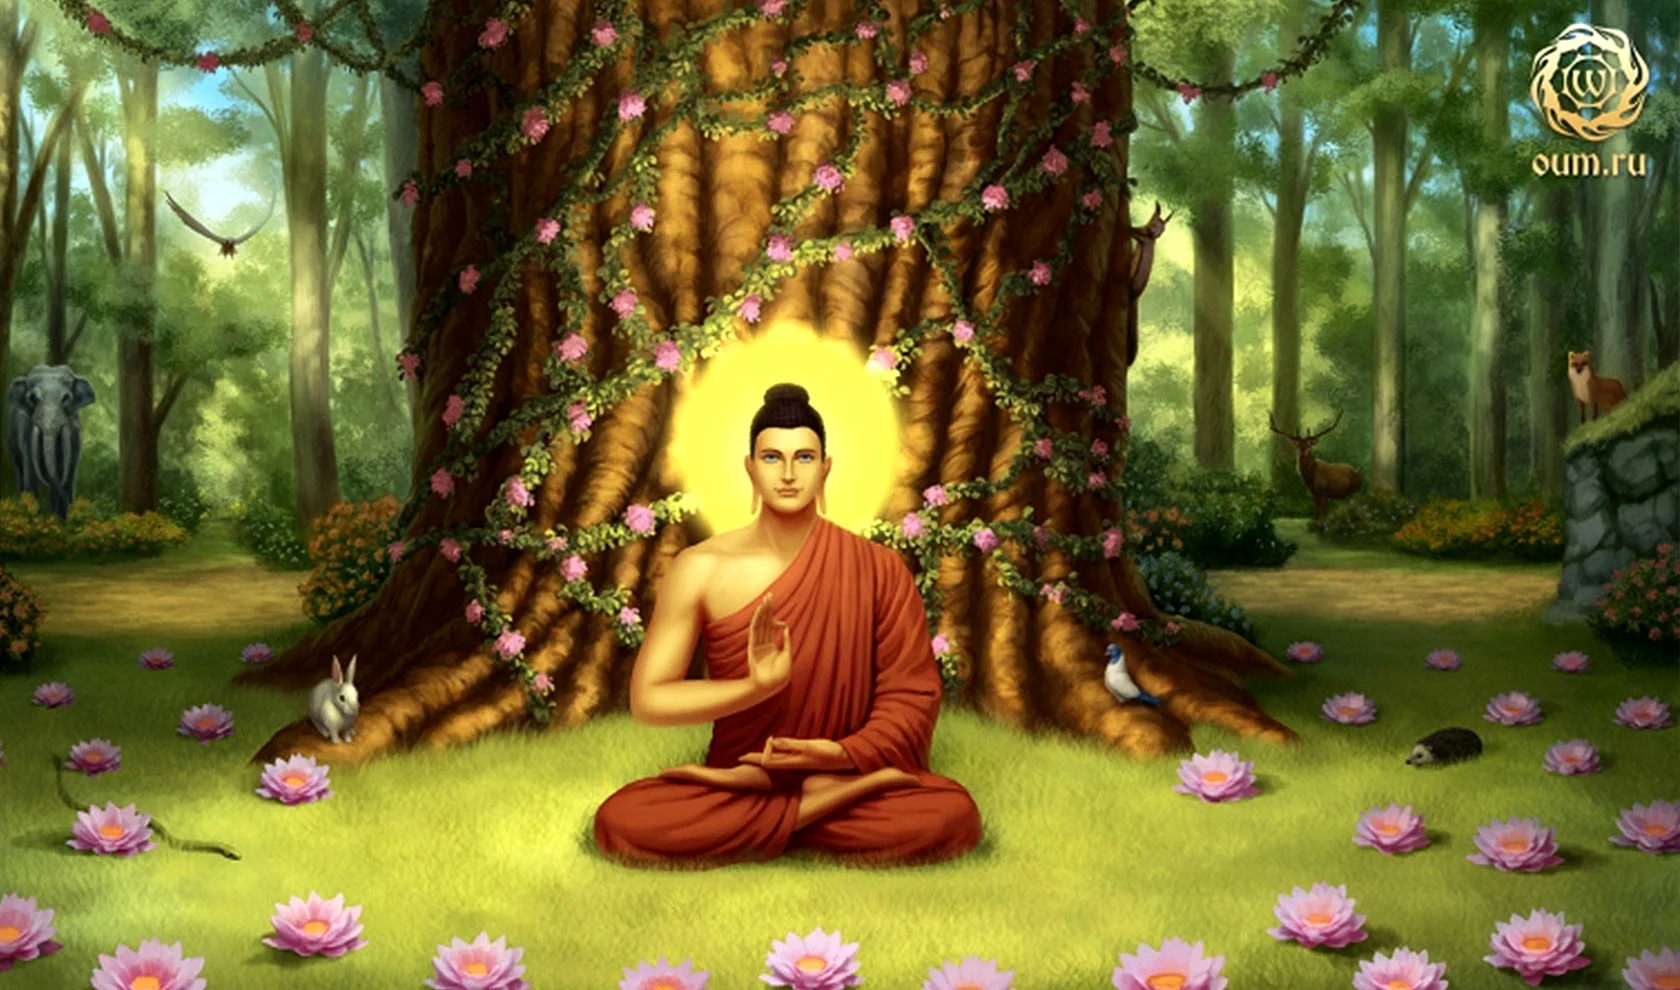 Bhagwan Buddha Wallpaper